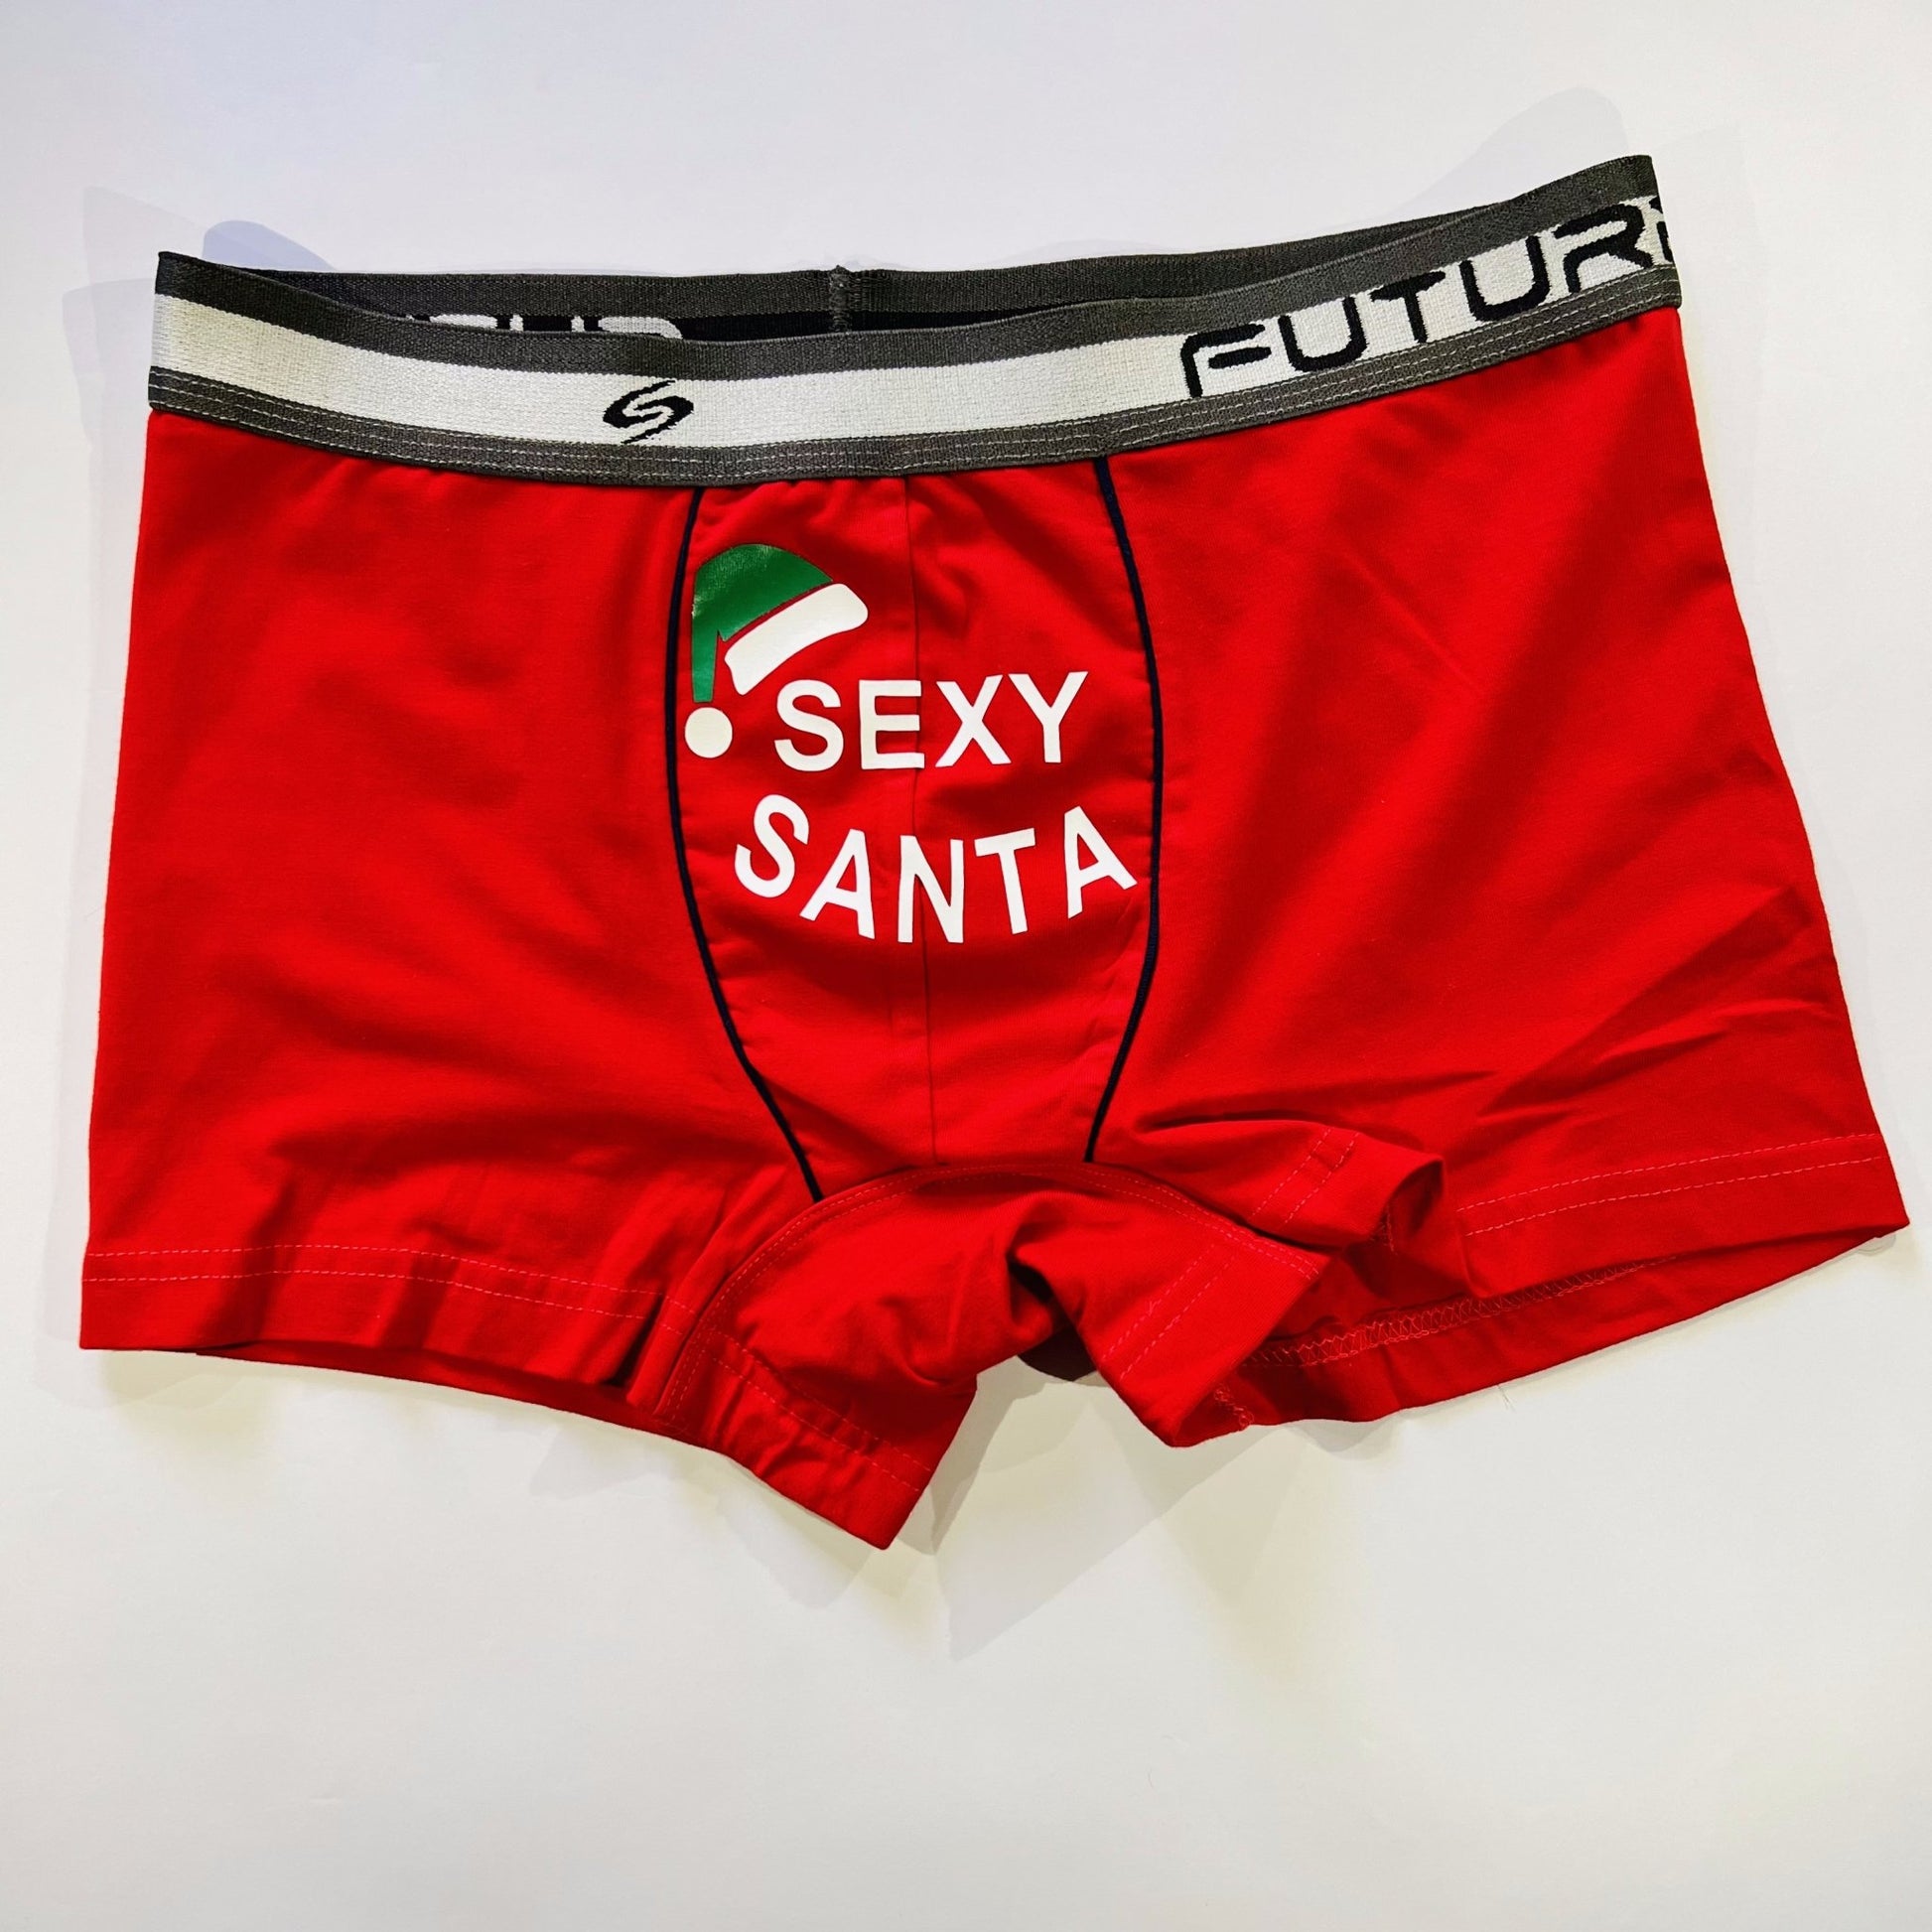 Men underwear - Sexy Santa - Etba3lly